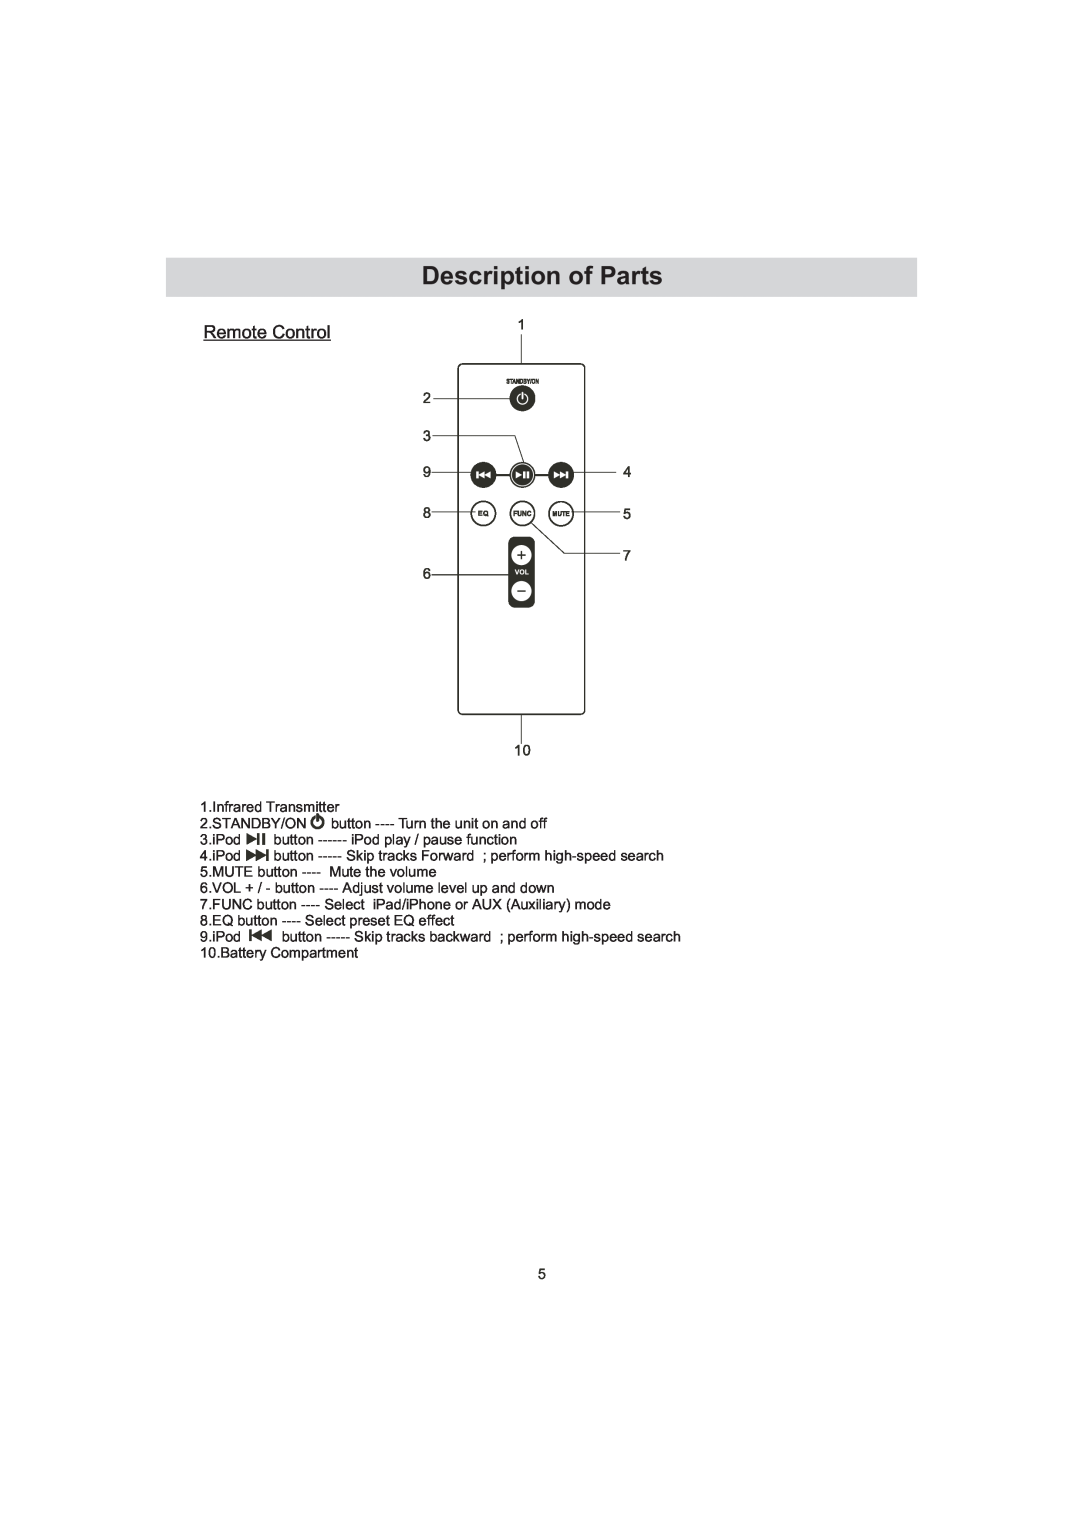 Haier IPD-01 manual Description of Parts, Remote Control 